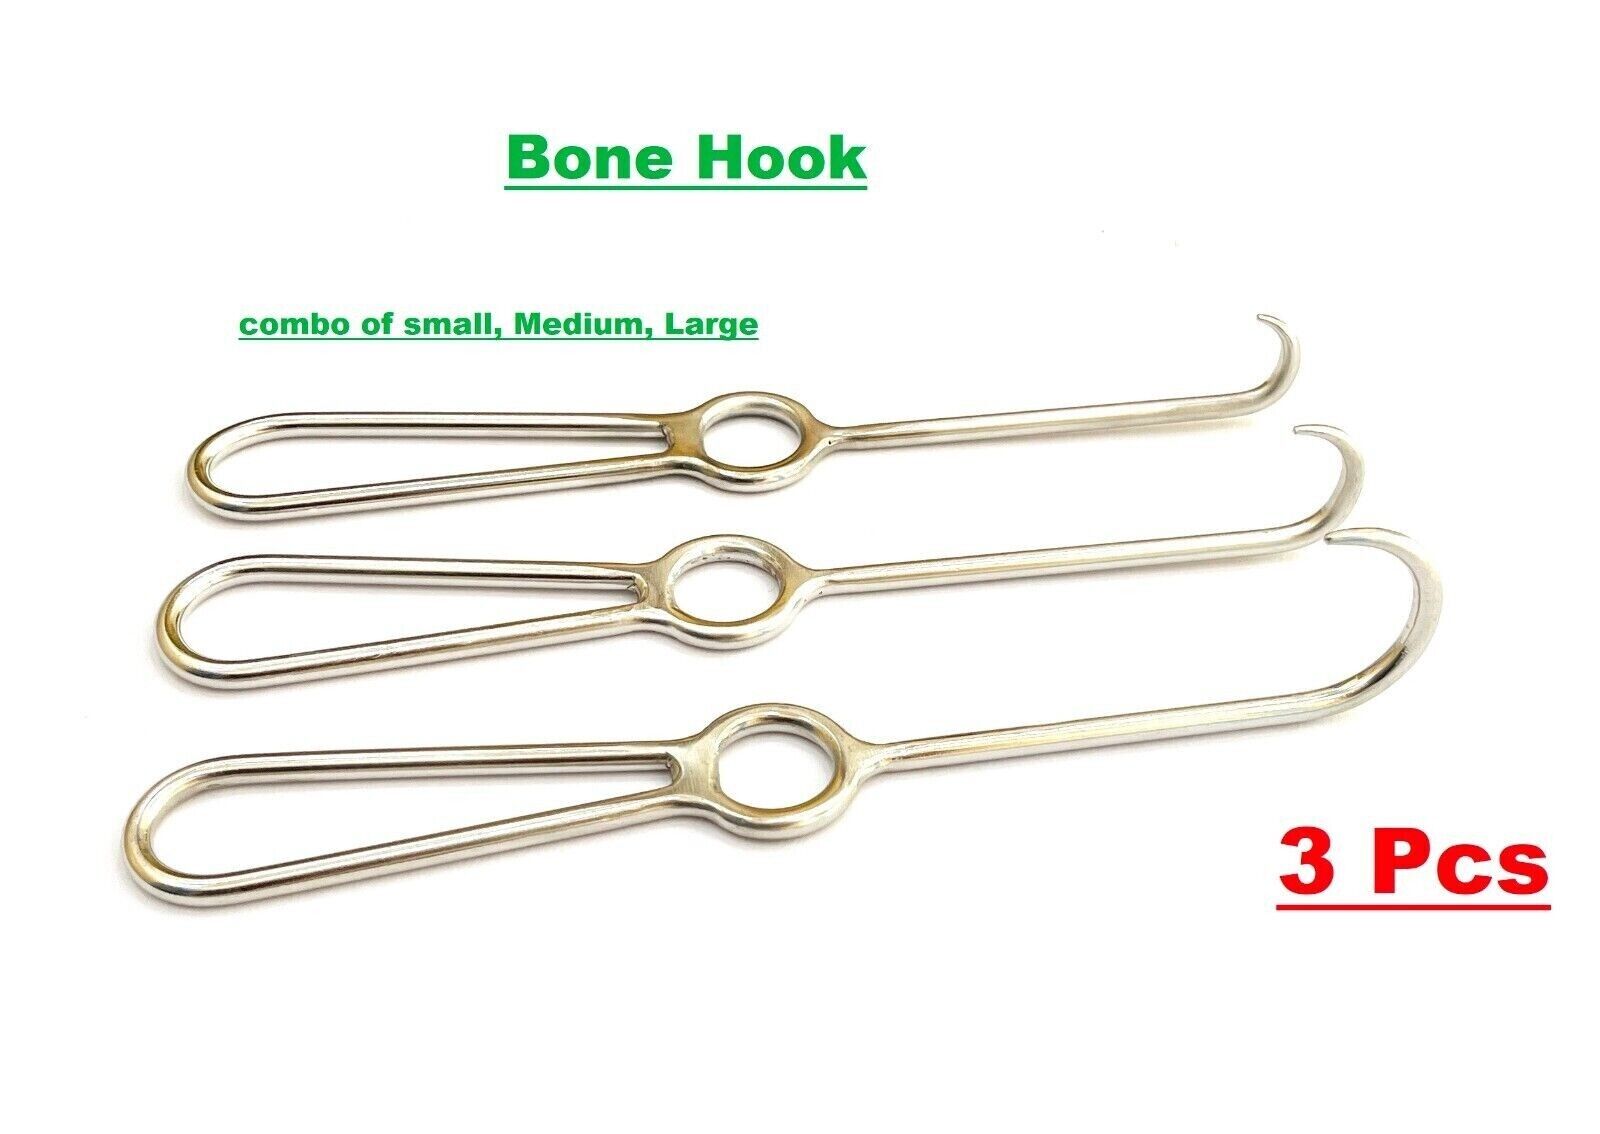 Bone Hook Small Medium Large Stainless Steel Orthopedic Surgical Instruments